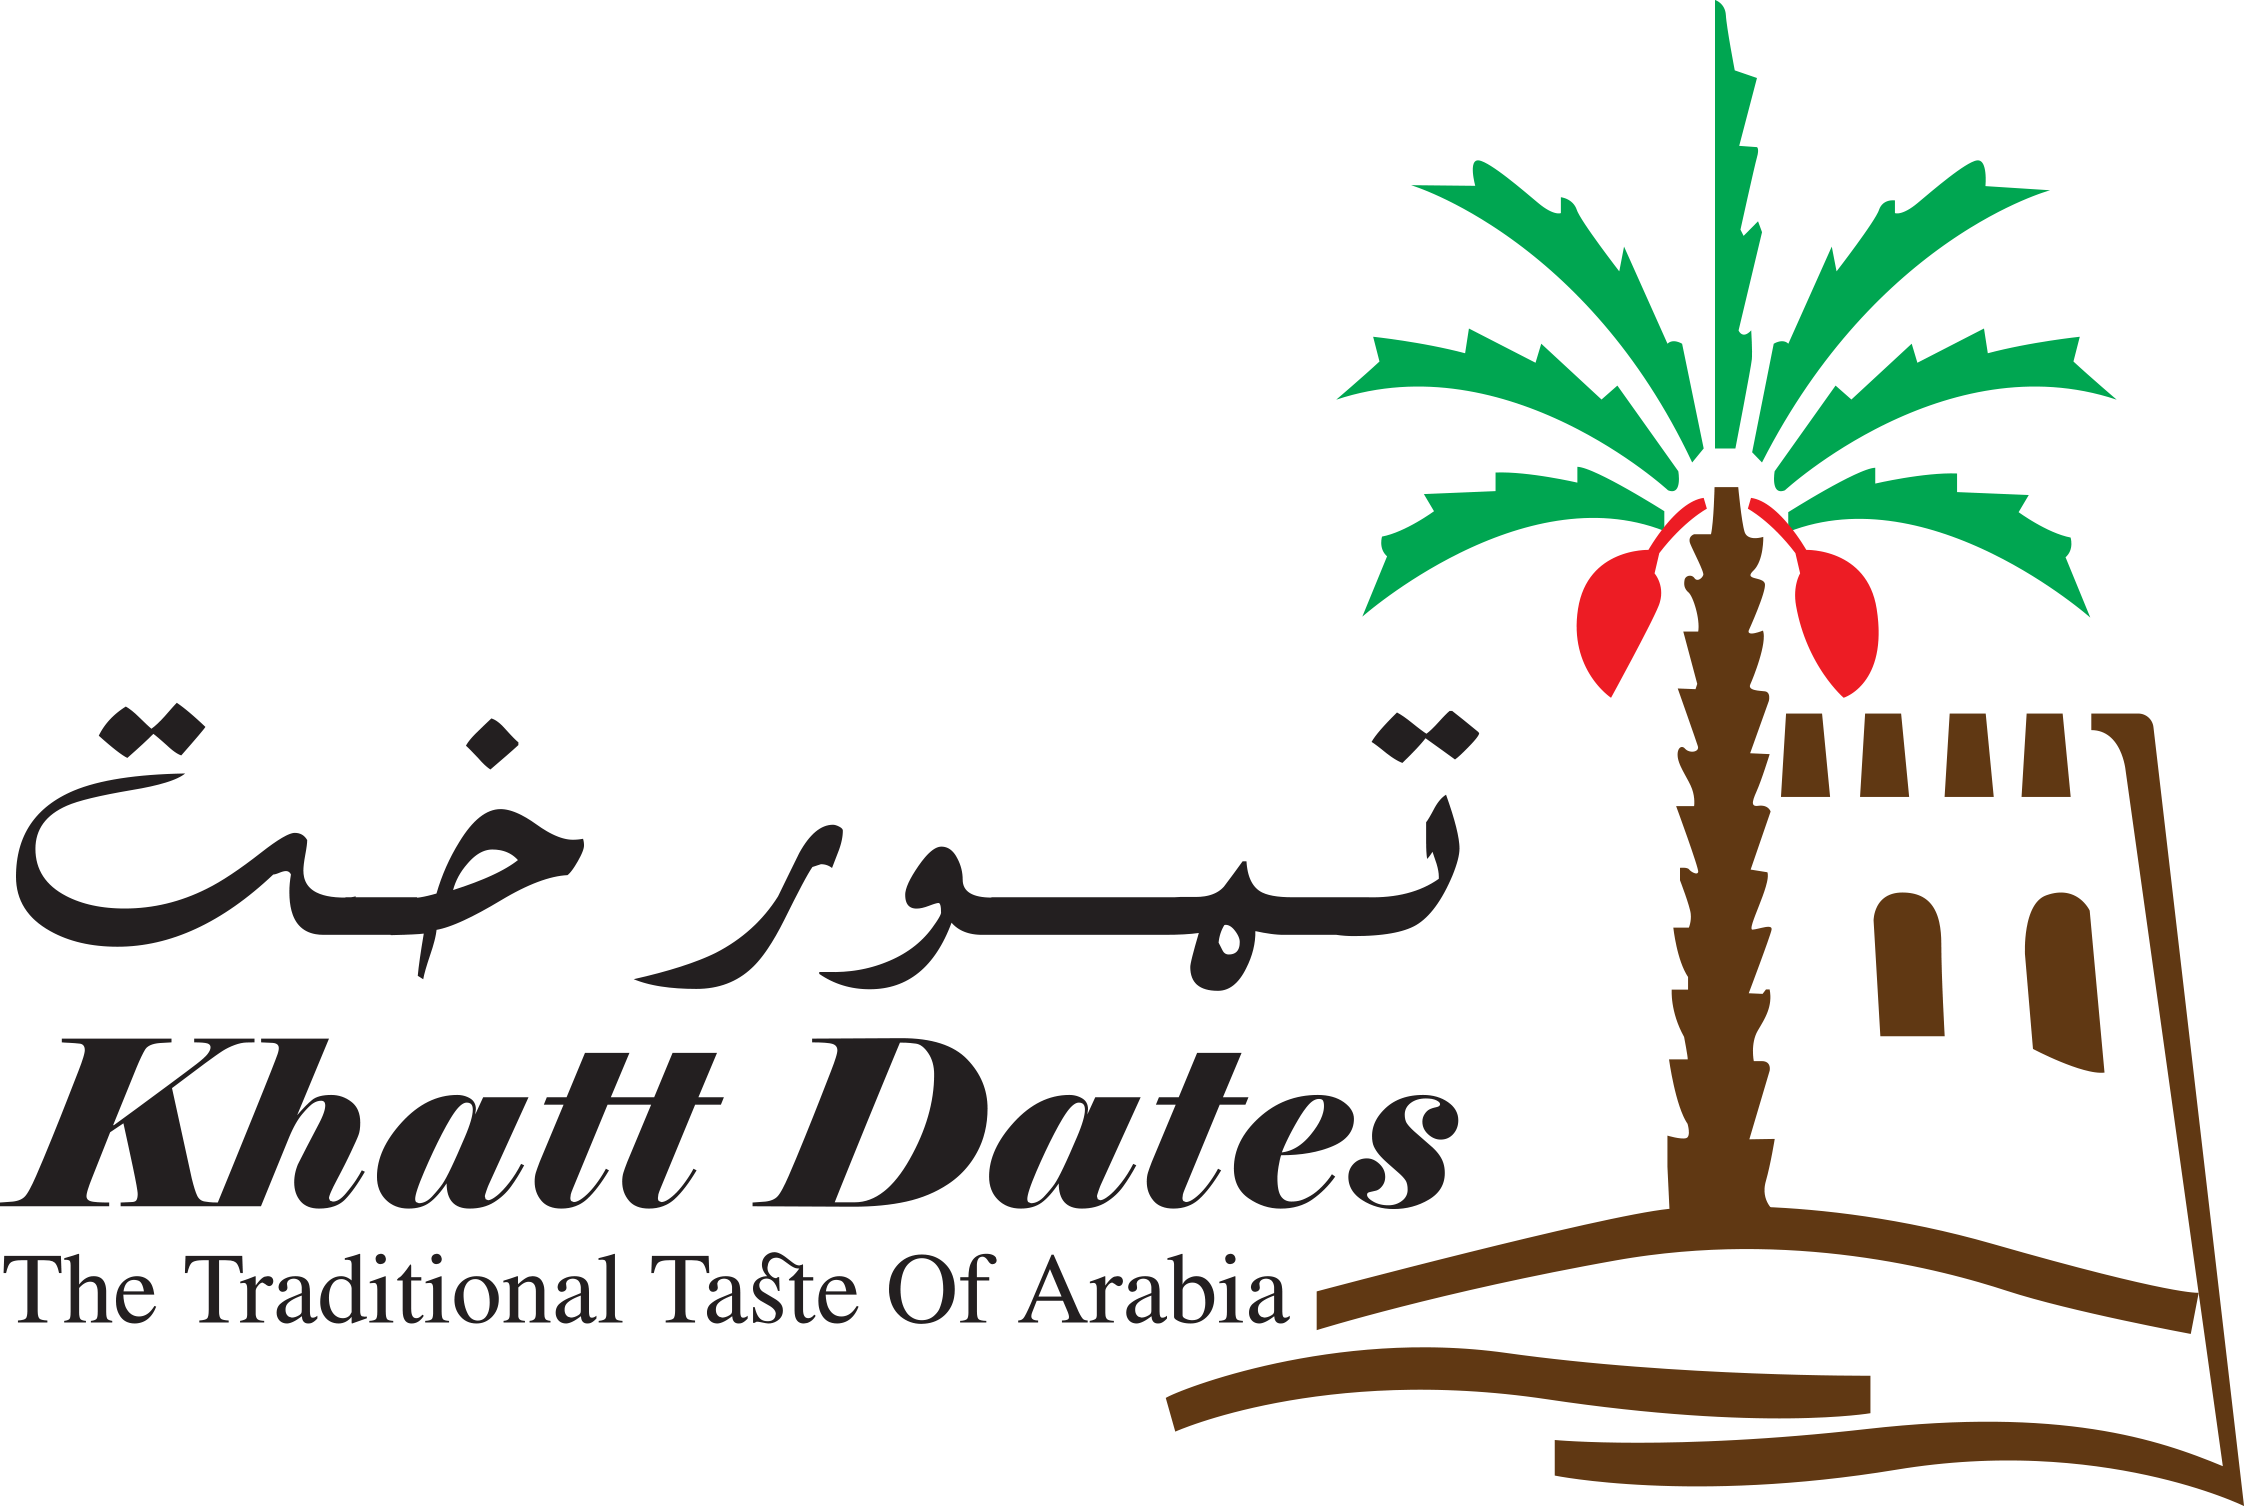 Khatt Dates